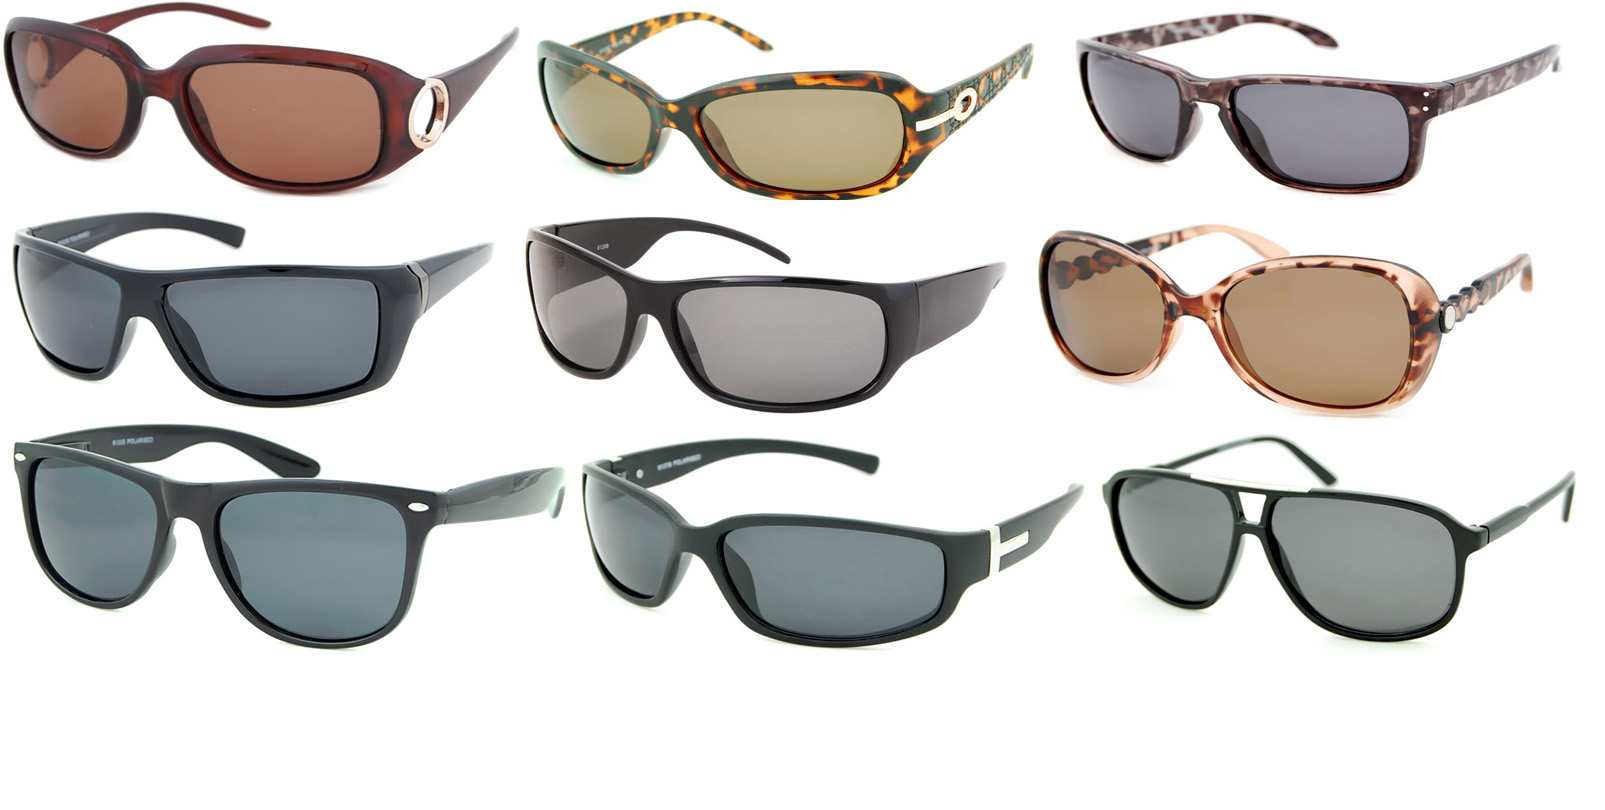 Are Your Sunglasses Up to Standard? | Optometrist Cherrybrook Eye ...